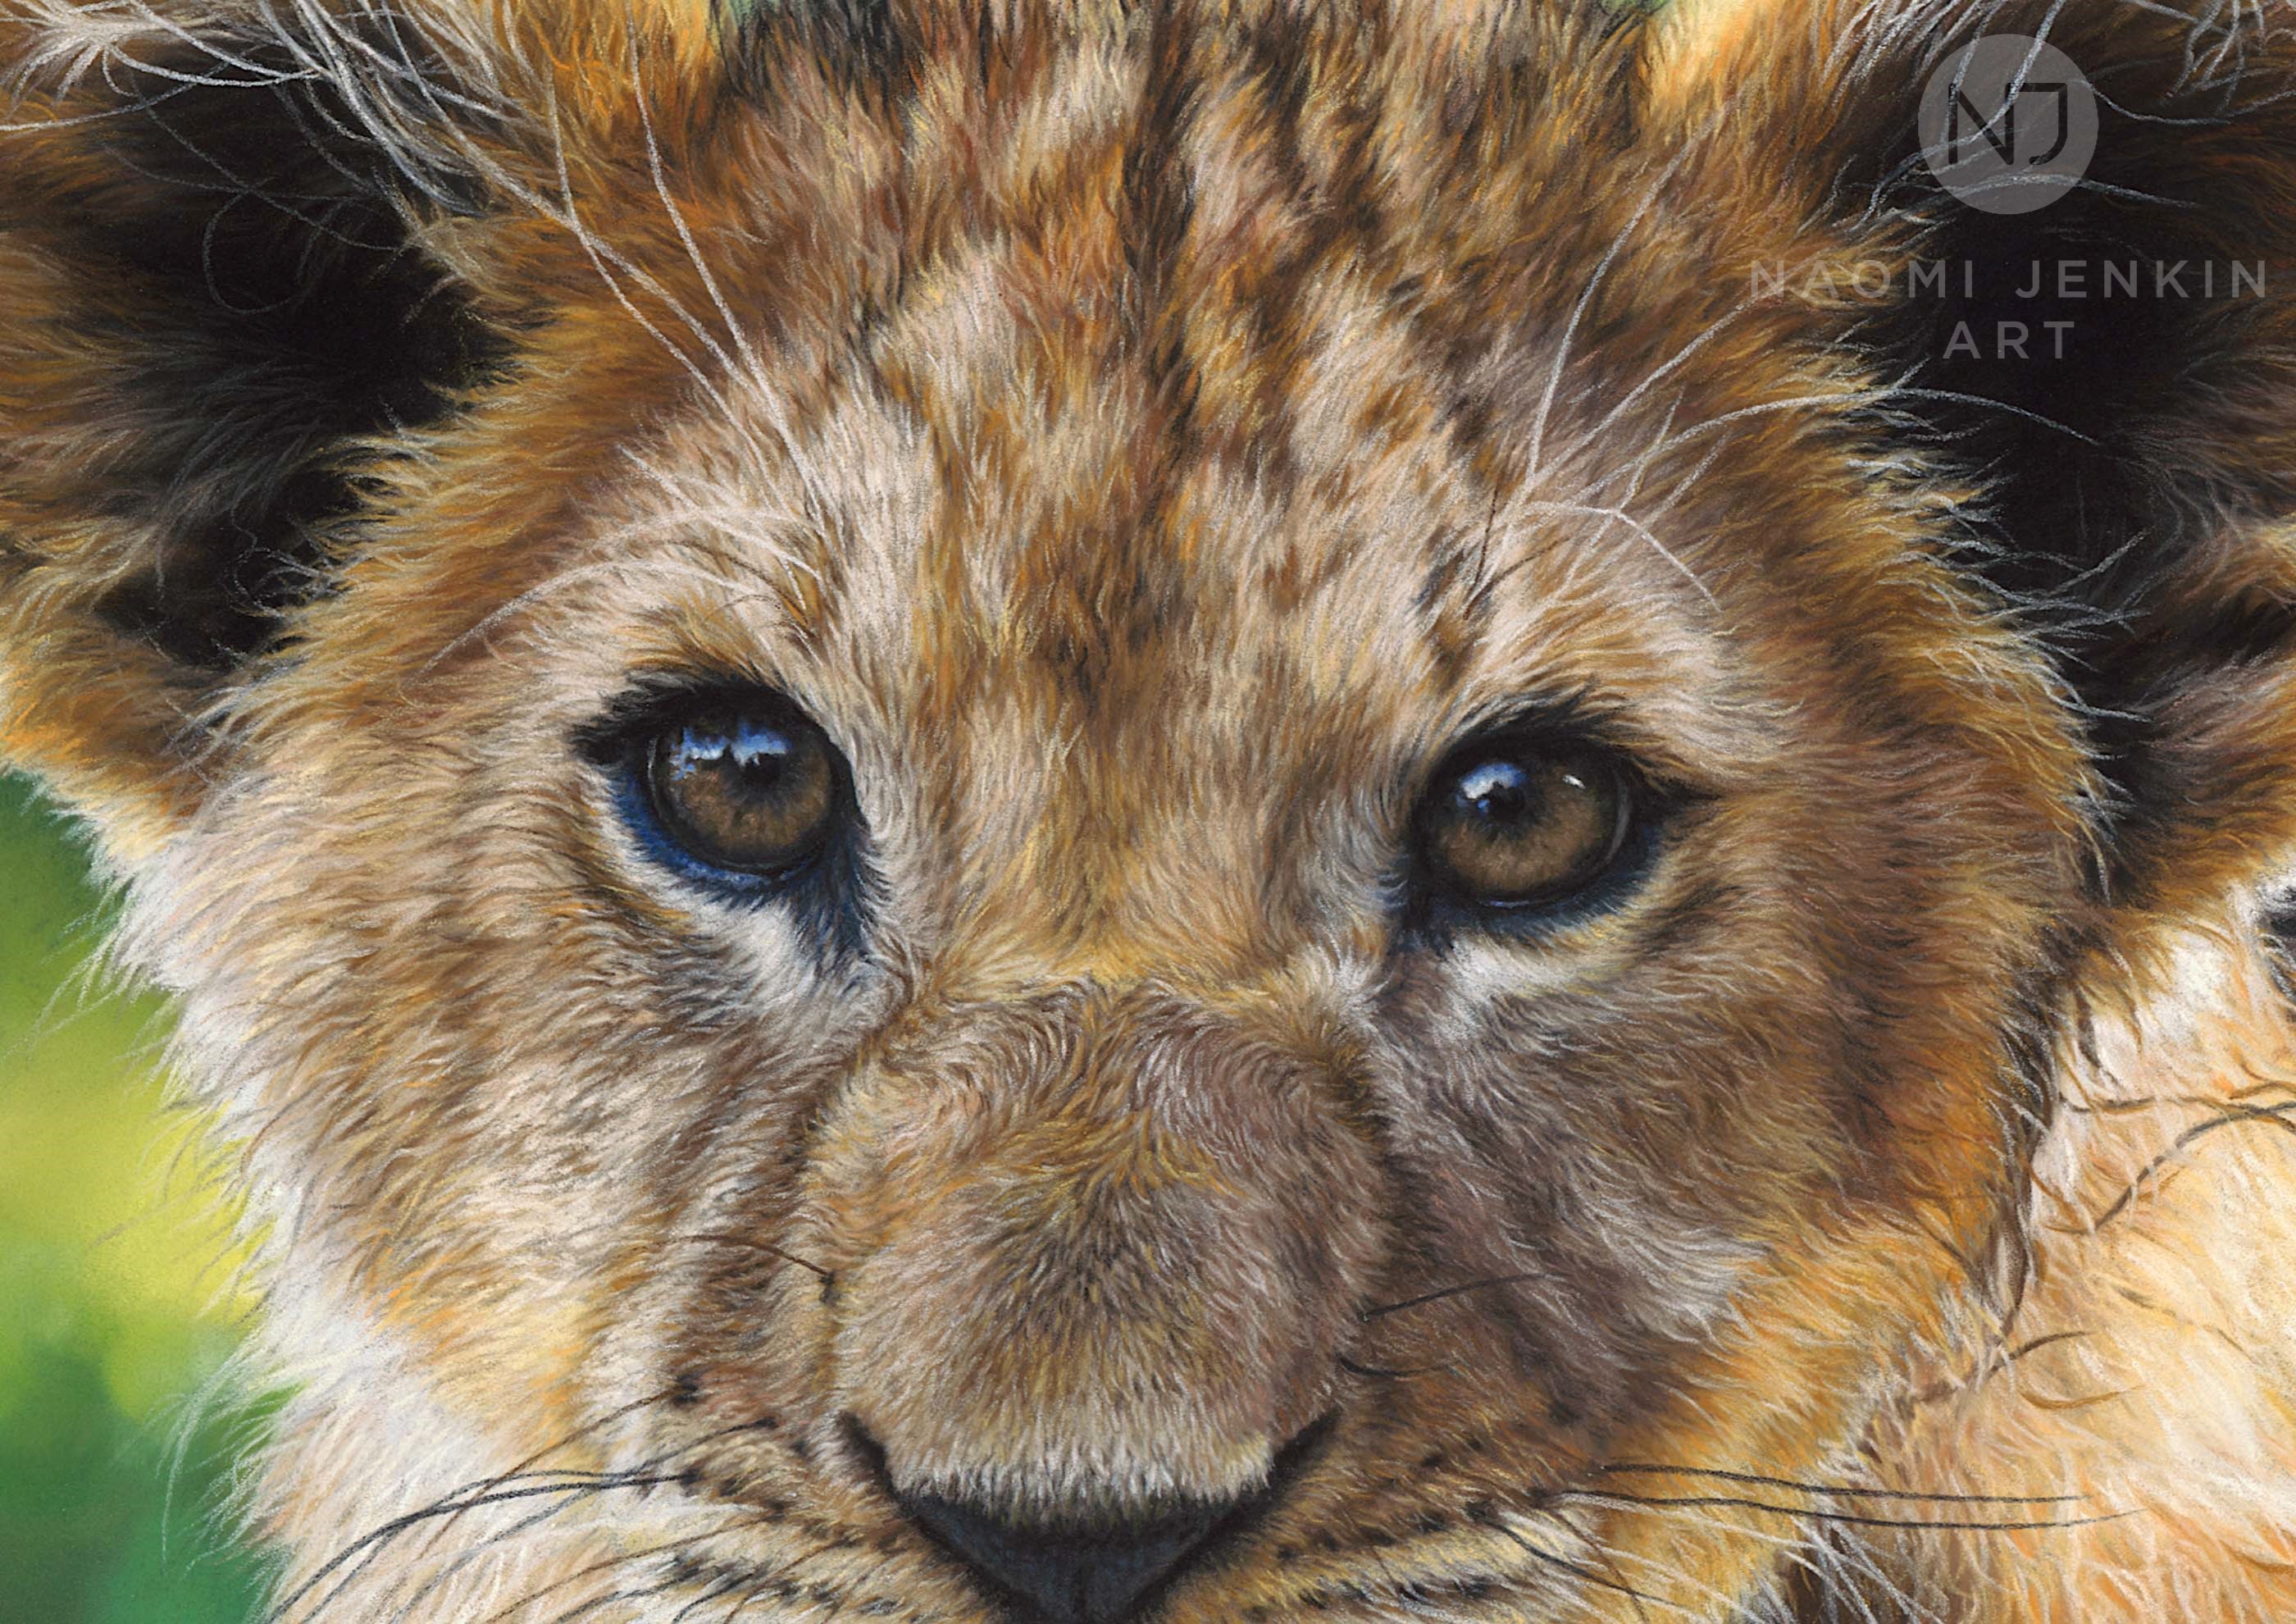 Close up of lion cub painting by wildlife artist Naomi Jenkin.